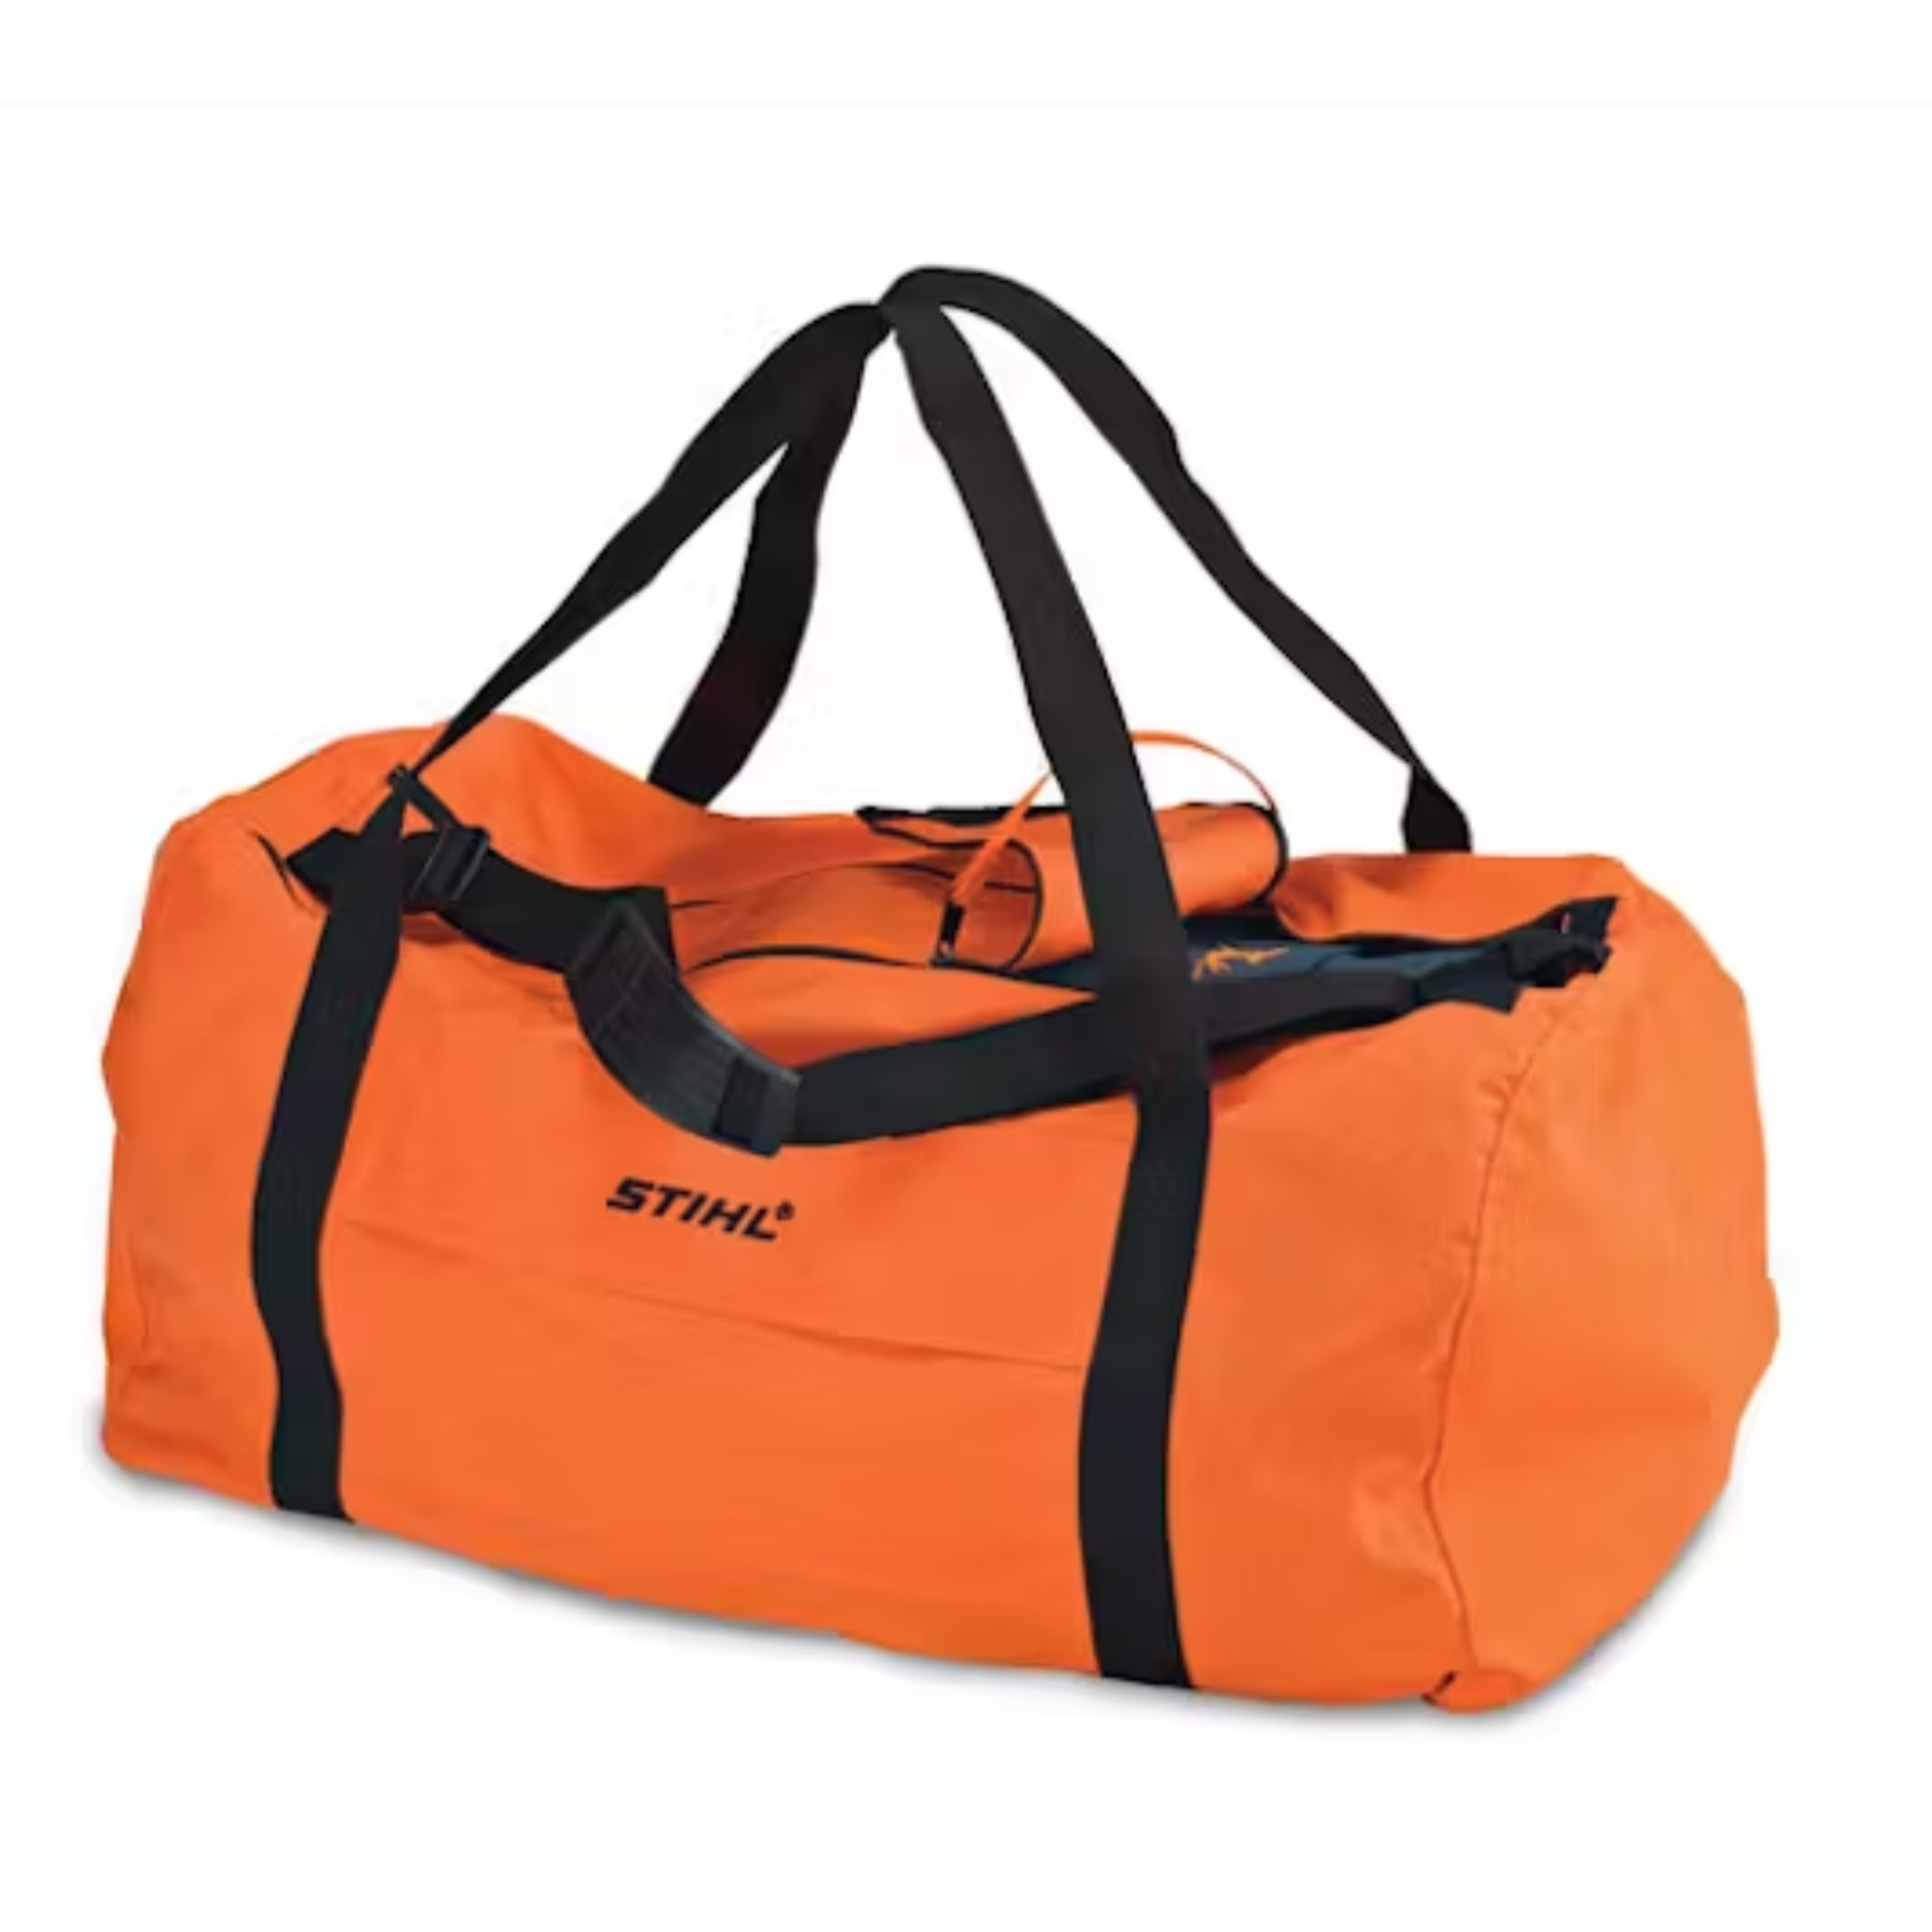 Stihl Water Resistant Nylon Duffle Bag